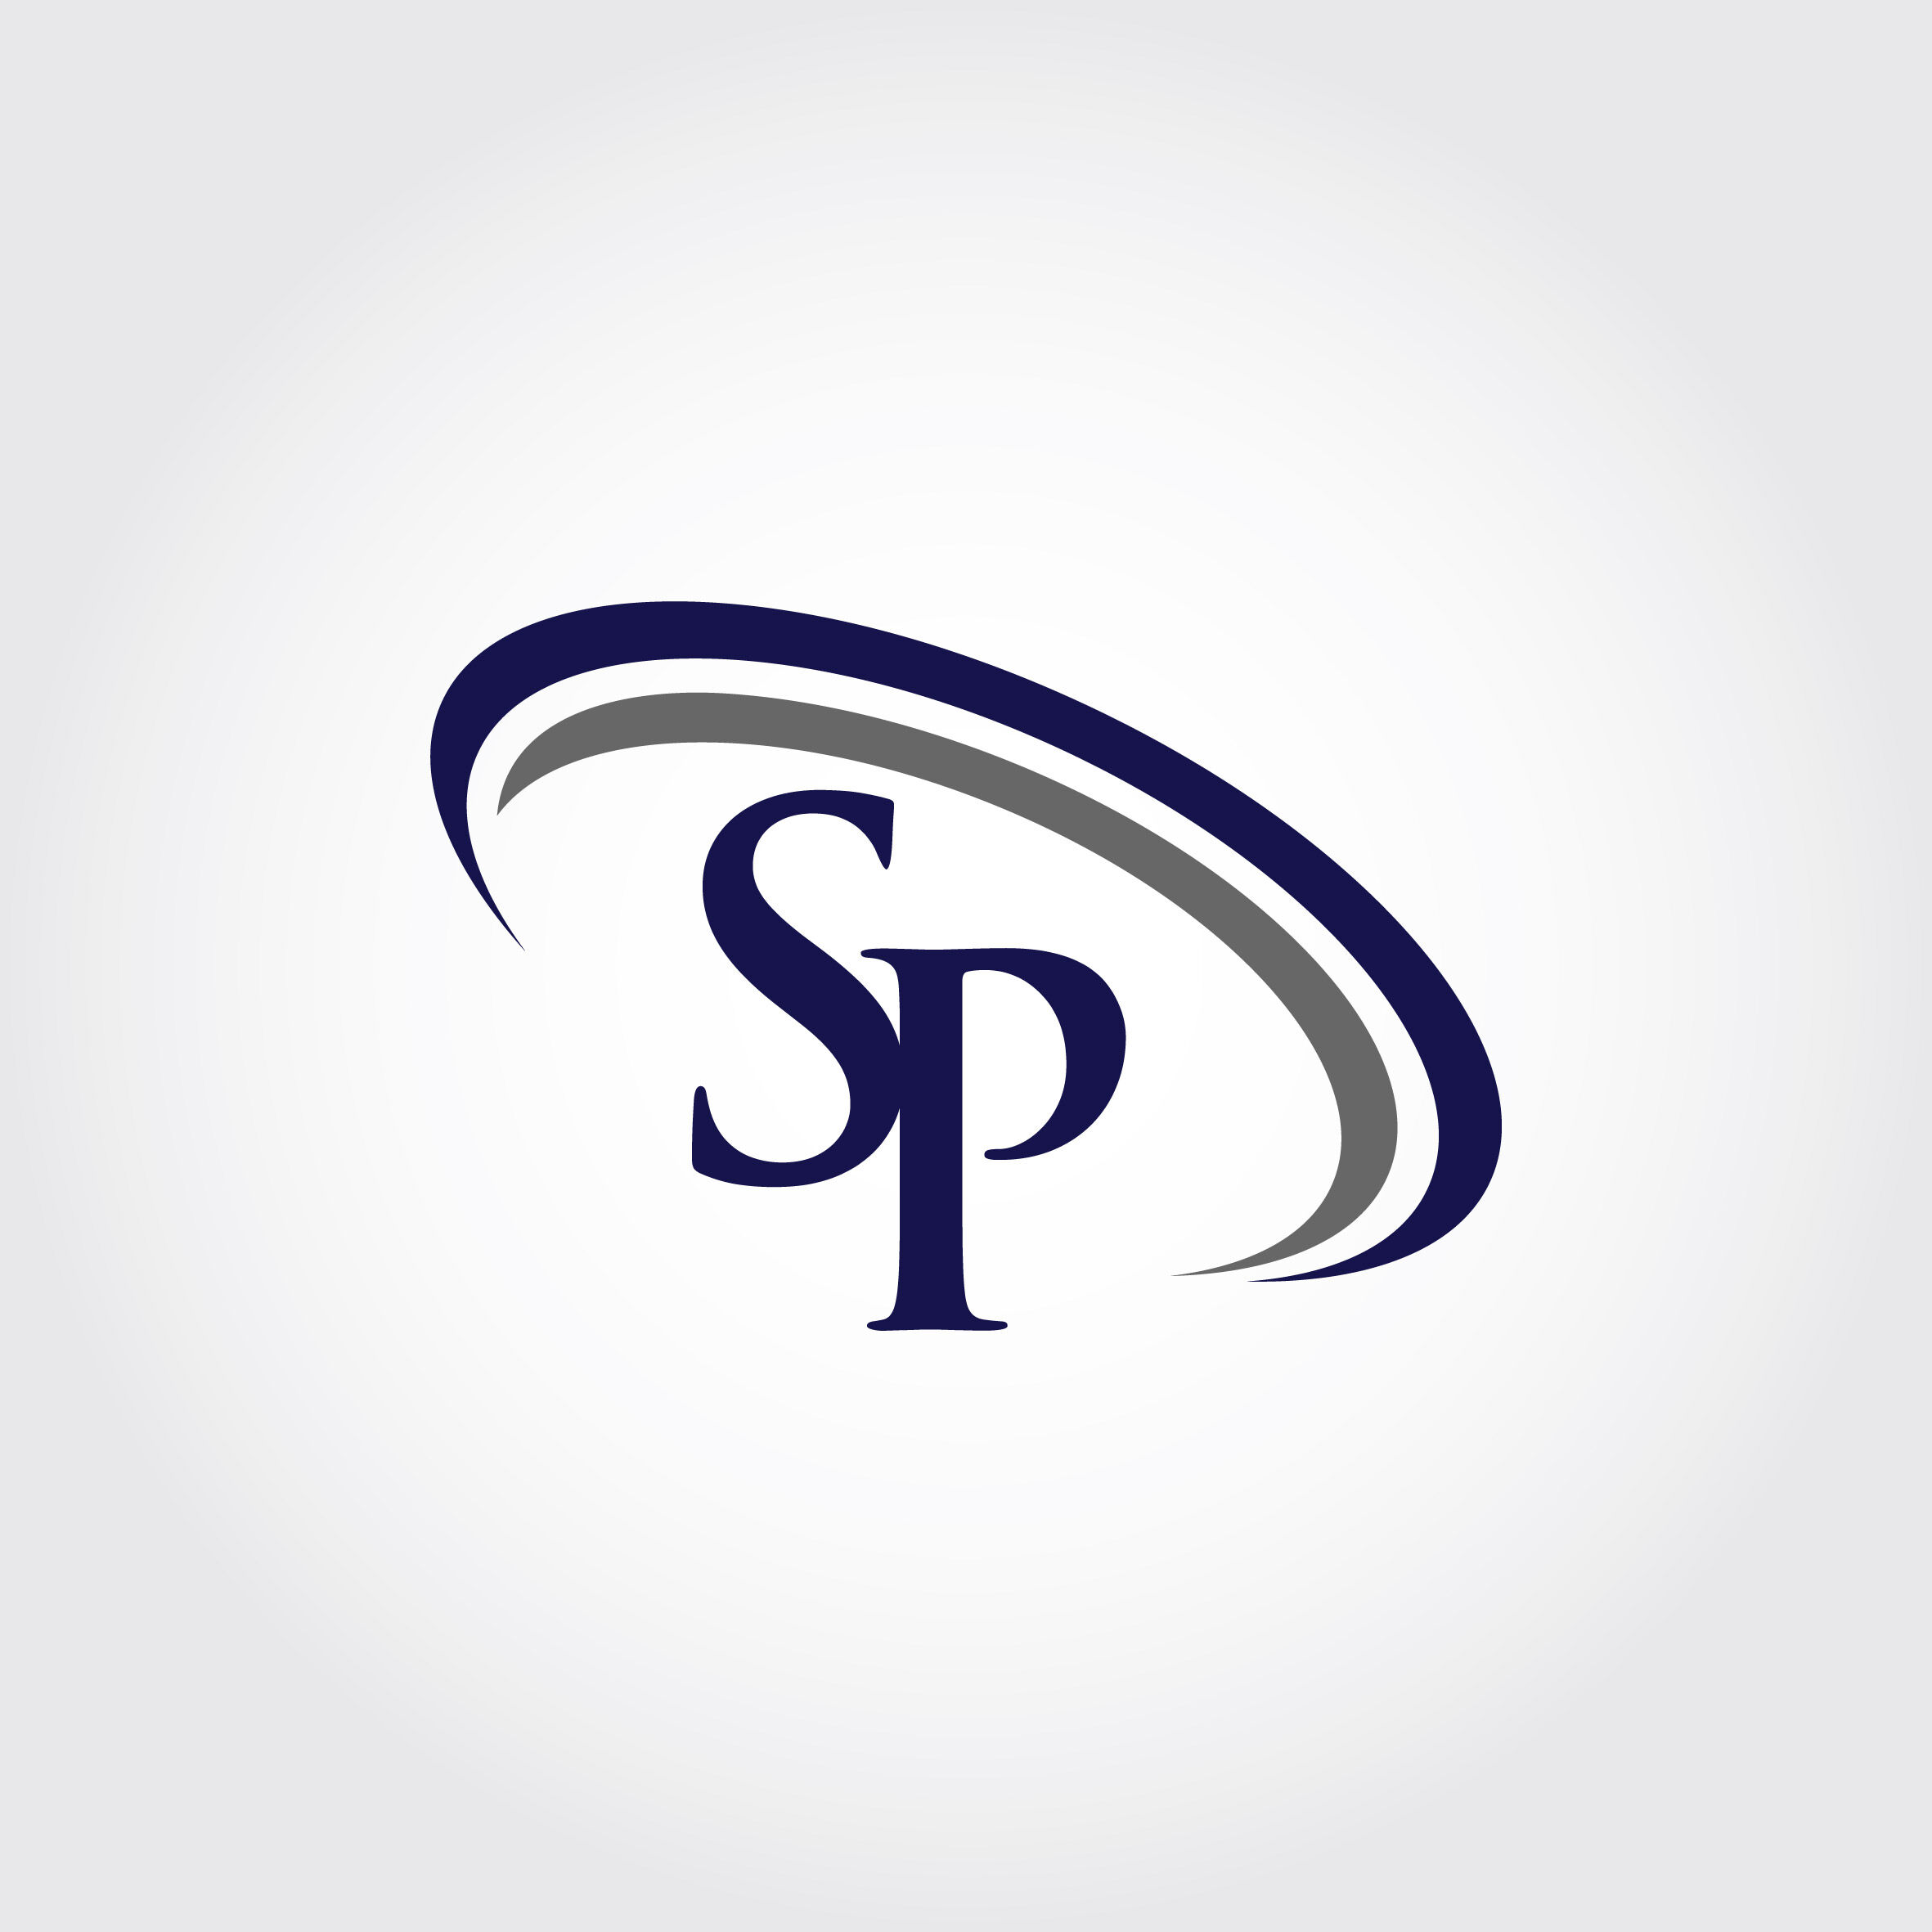 Sp Logo Design | estudioespositoymiguel.com.ar